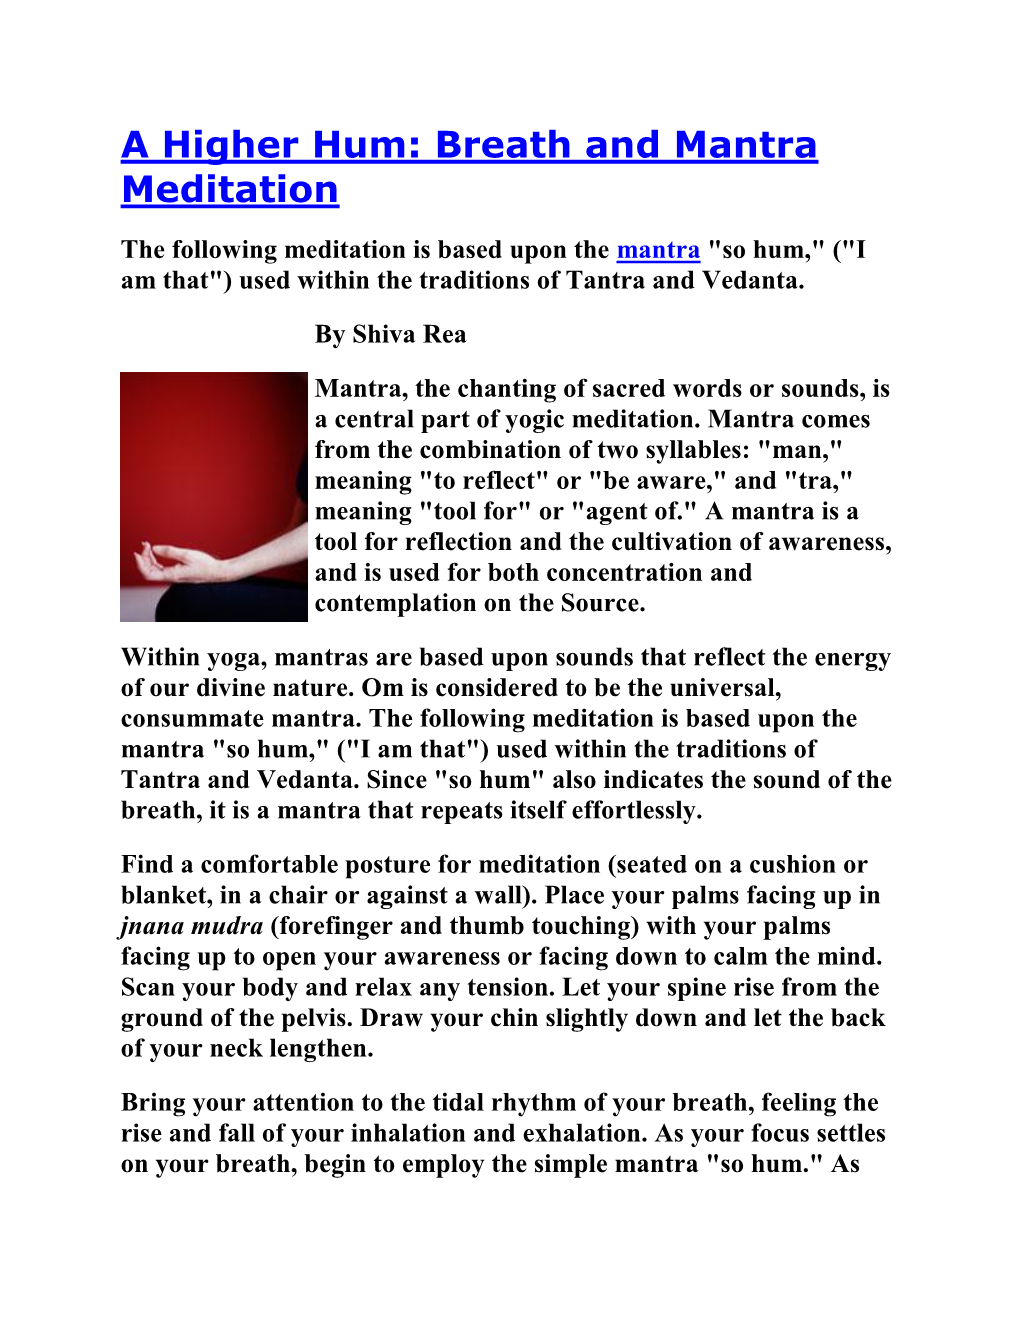 Breath and Mantra Meditation